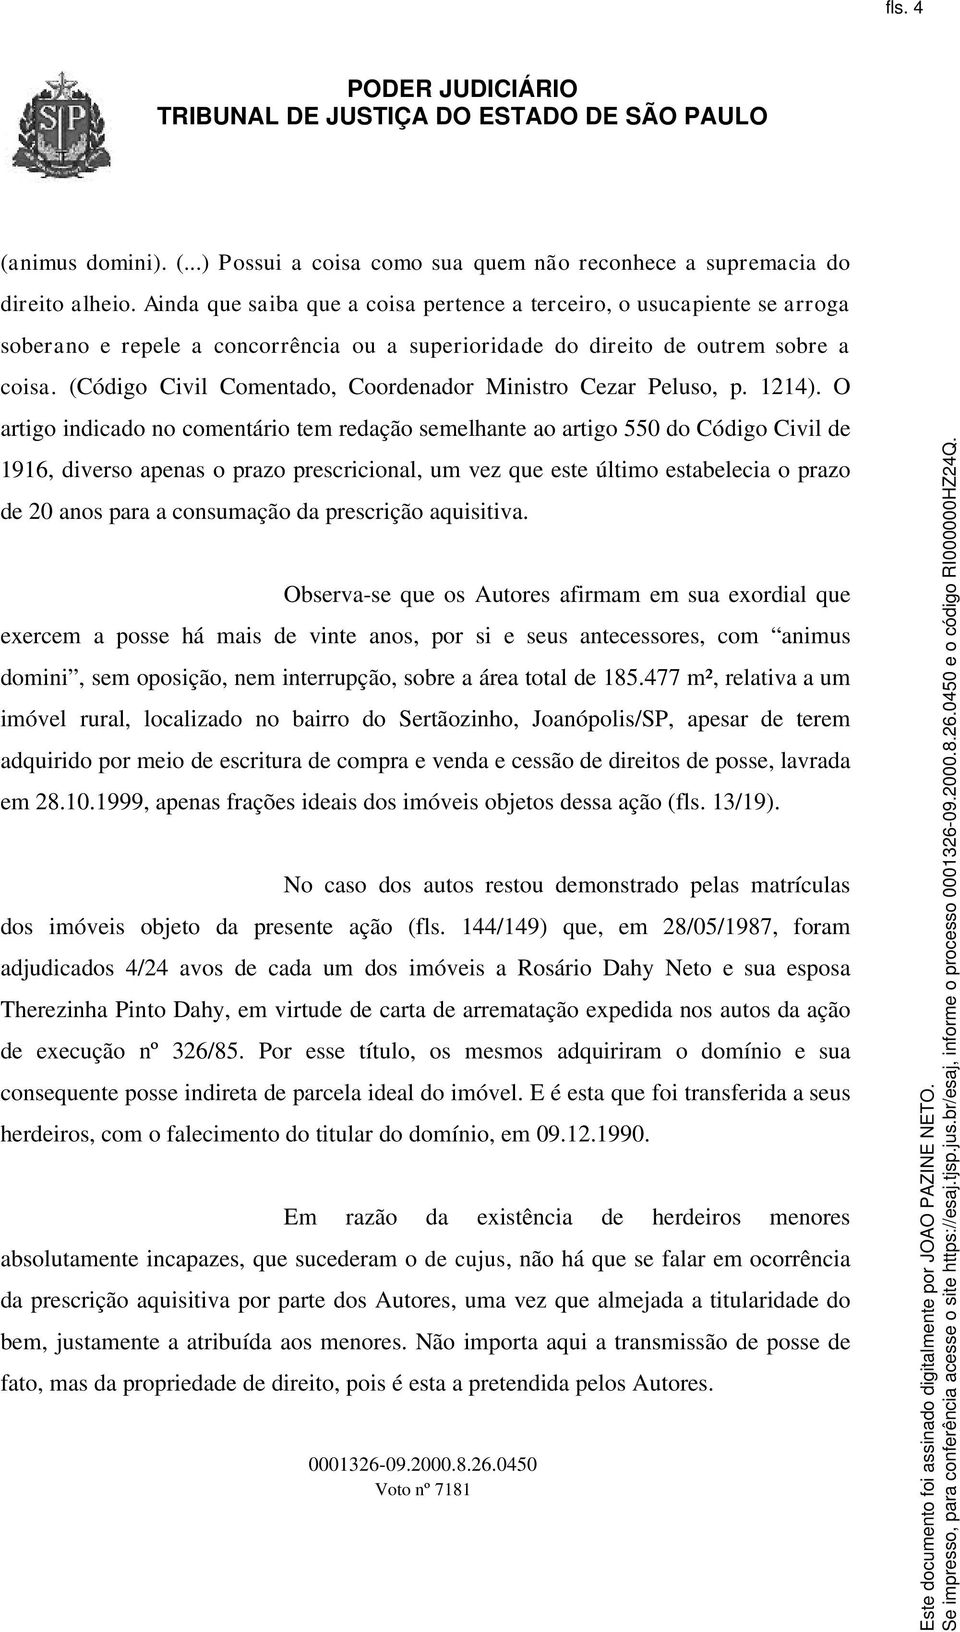 (Código Civil Comentado, Coordenador Ministro Cezar Peluso, p. 1214).